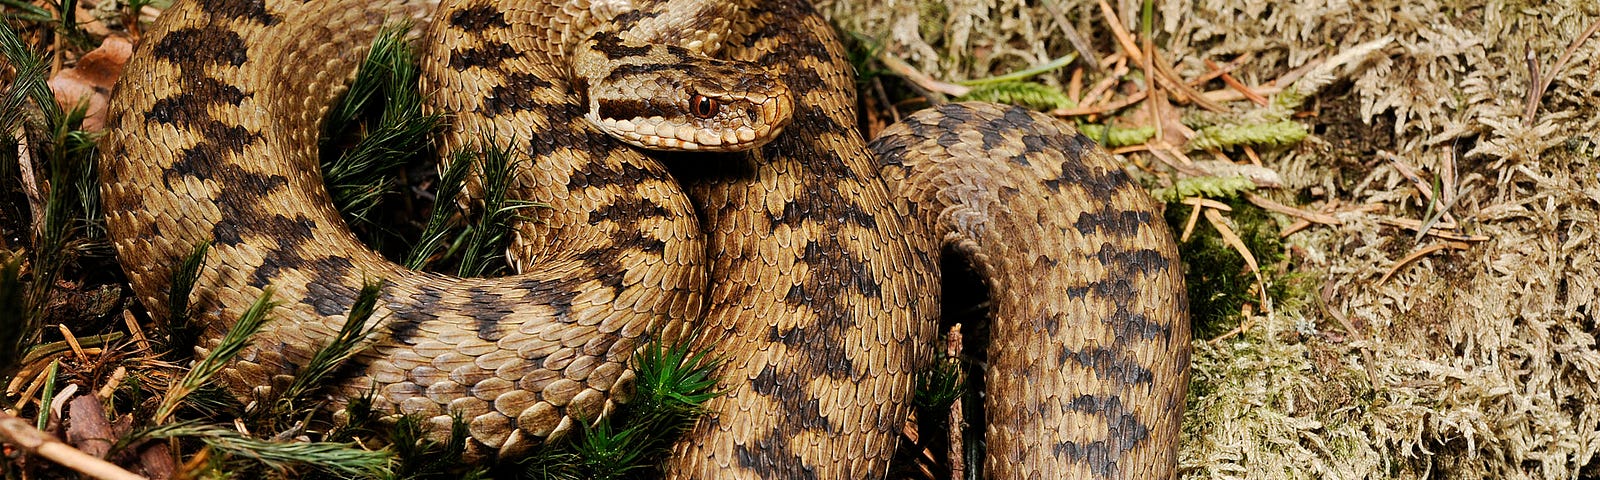 Photo of European adder snake in the grass